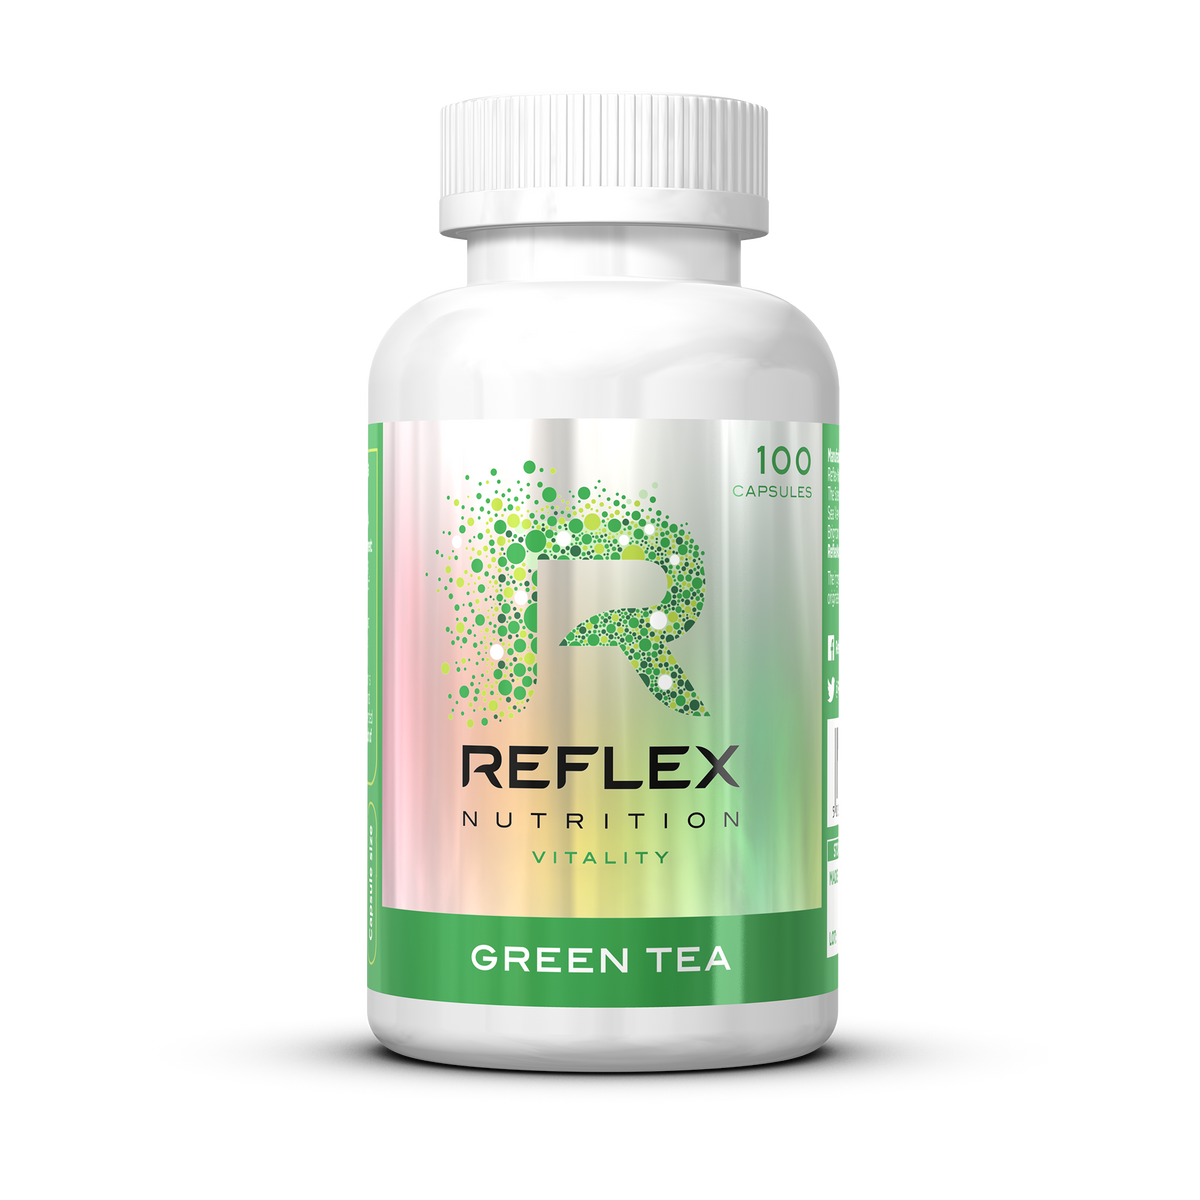 Reflex Nutrition Green Tea - Green tea